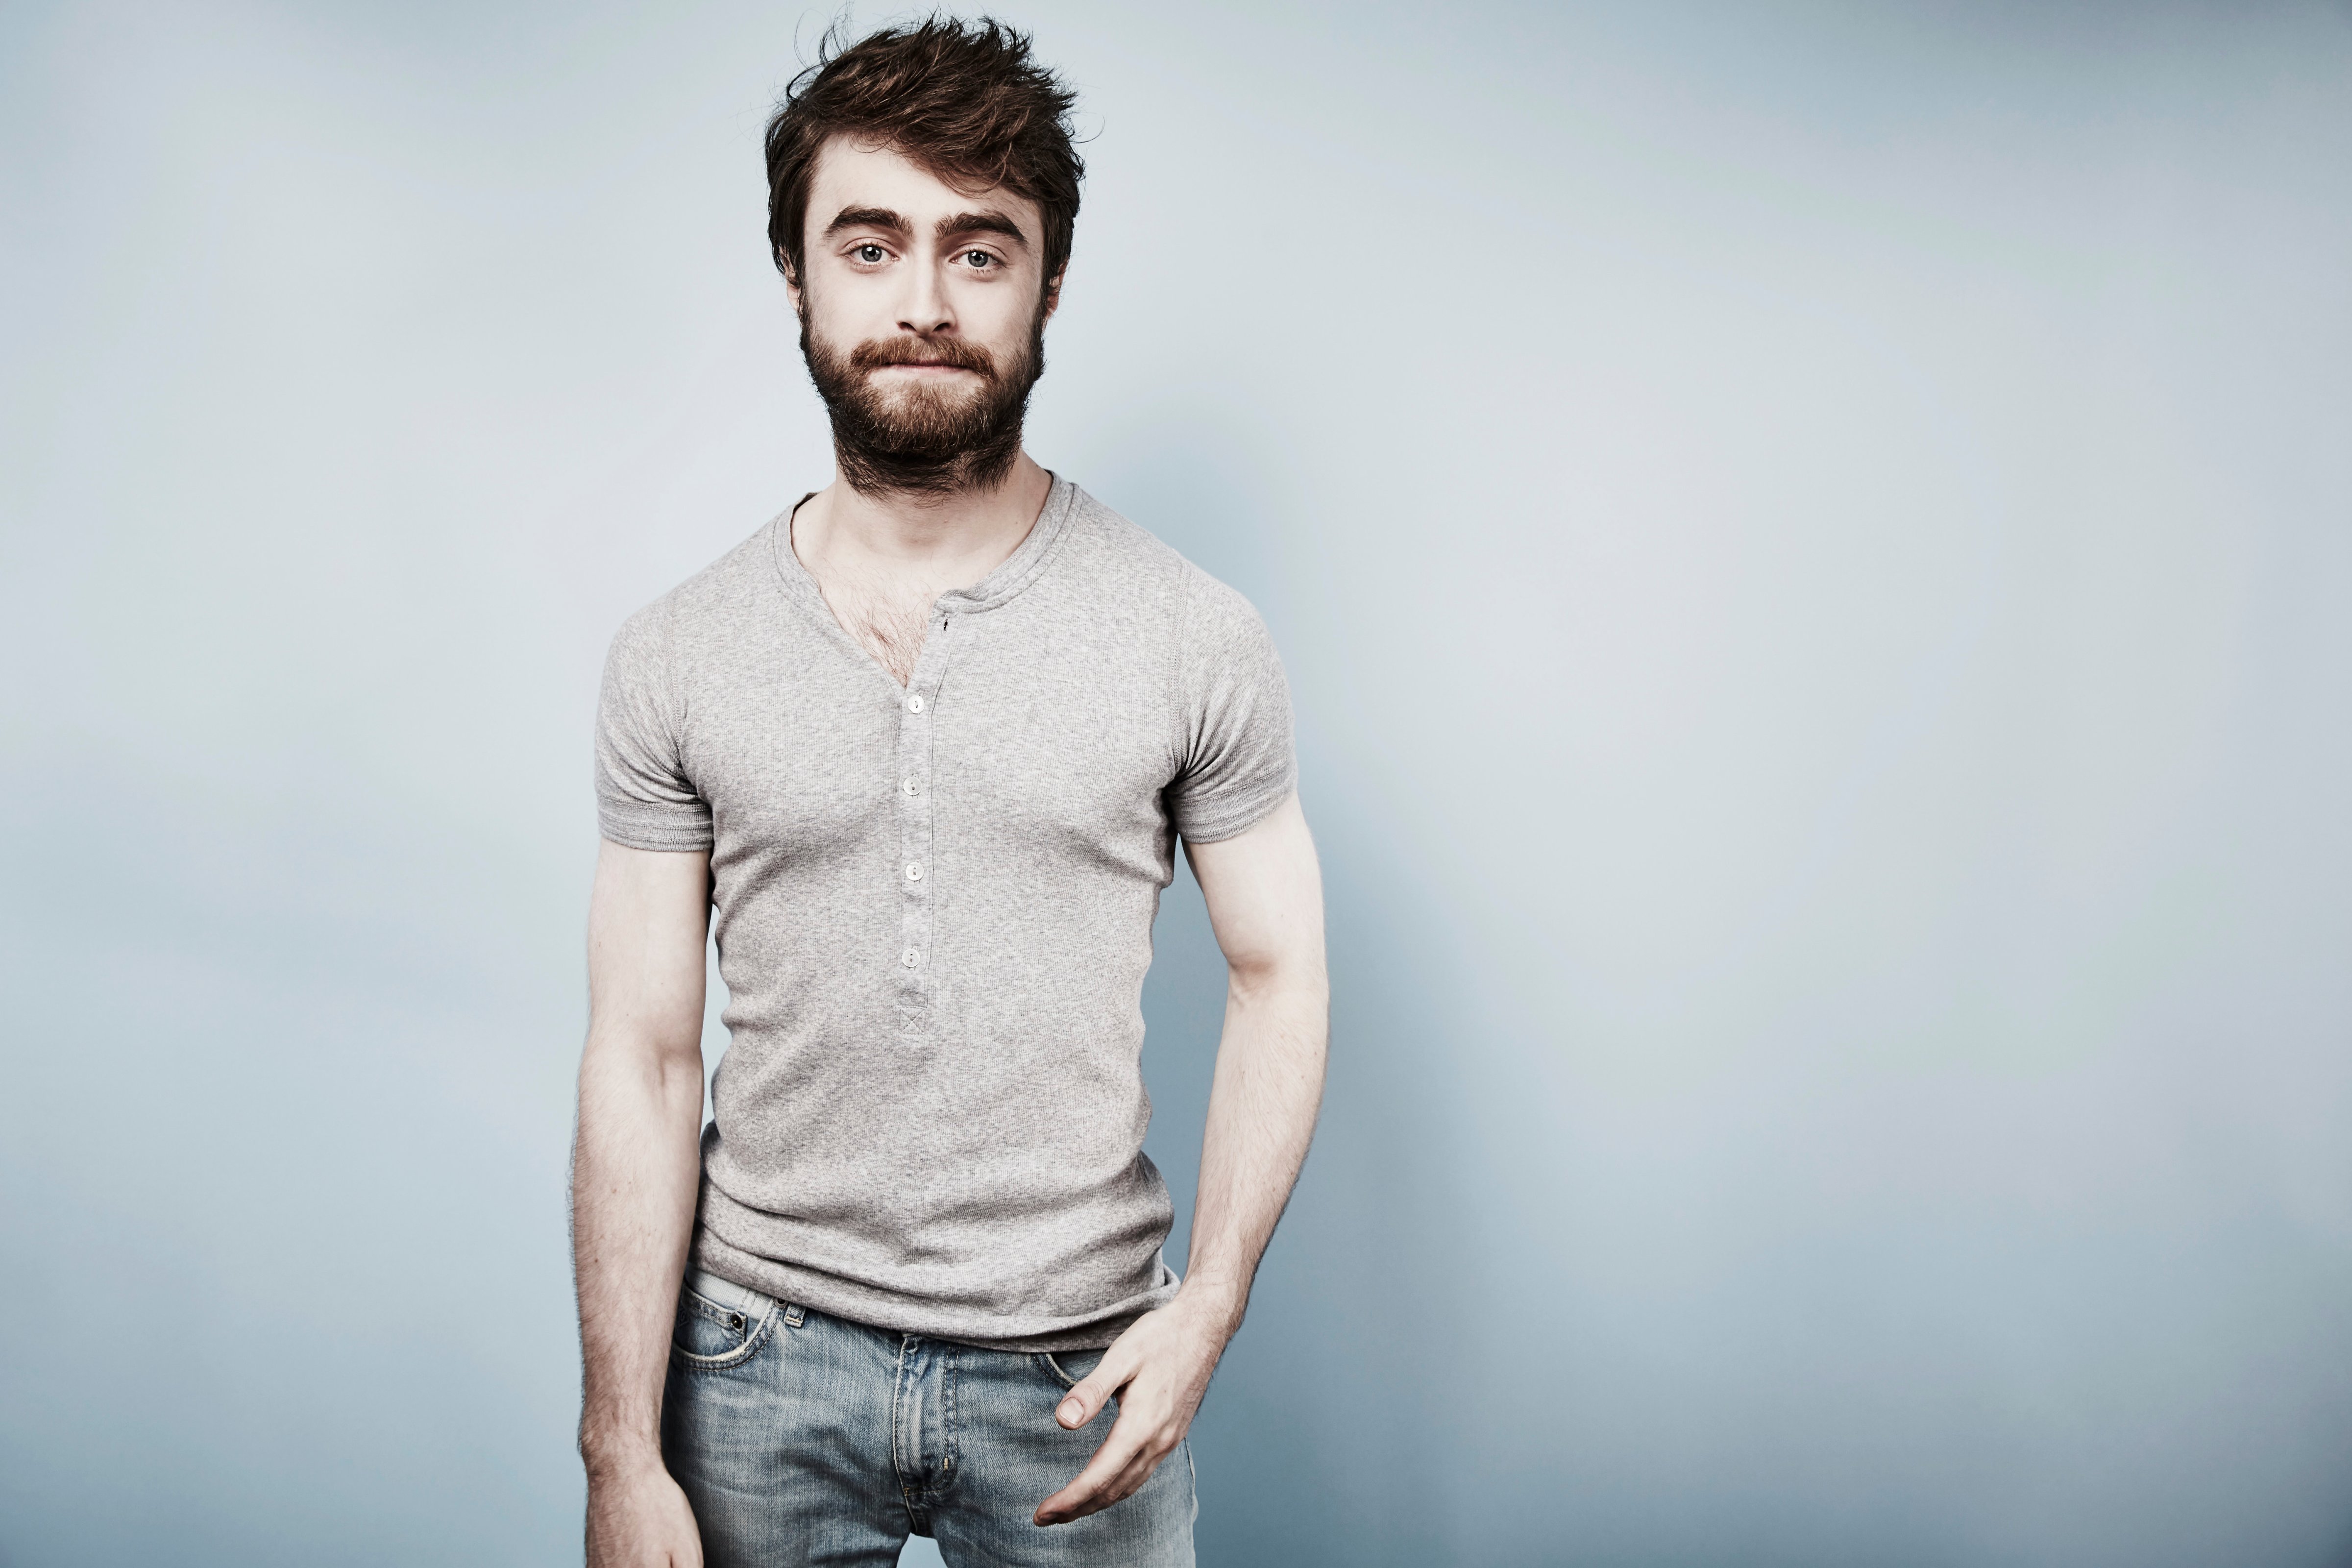 Actor Daniel Radcliffe poses for a portrait in San Diego on July 11, 2015. (Maarten de Boer—Getty Images)